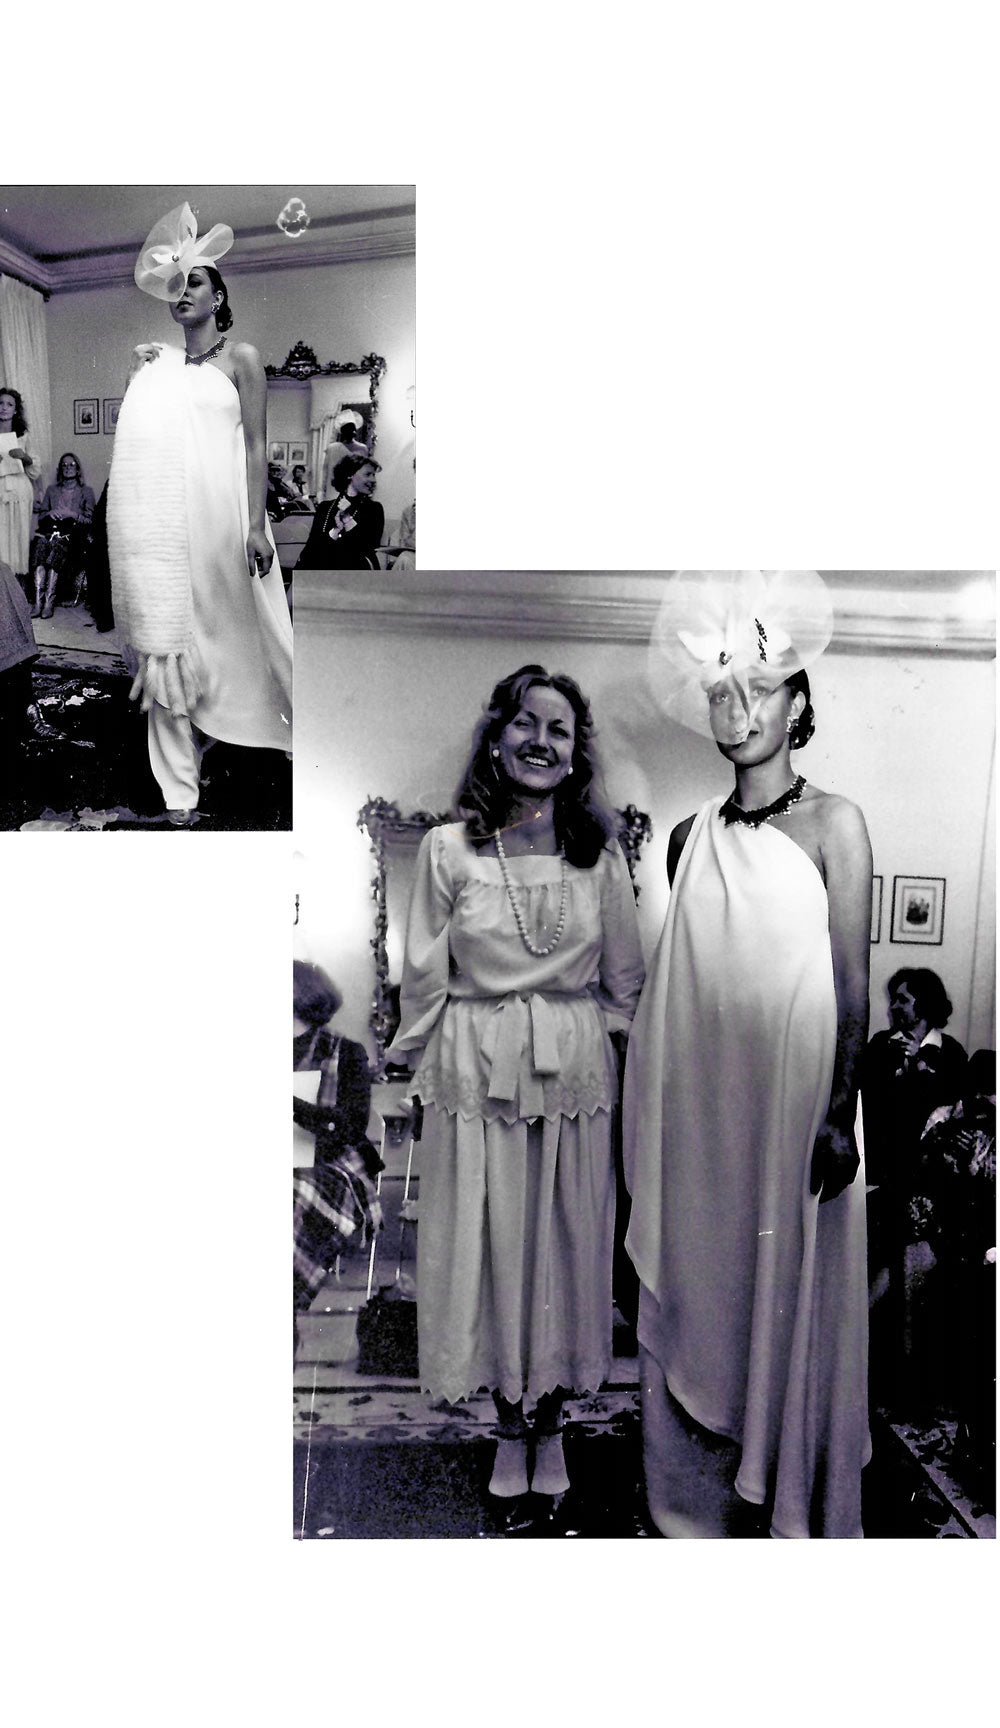 Modedesignerin Helga Okan, Gründerin von PIO O'KAN,  neben Model, gekleidet in Helga Kienel Couture, der damaligen Couture/Modemarke der Designerin Ende der 1970er/Anfang 1980er